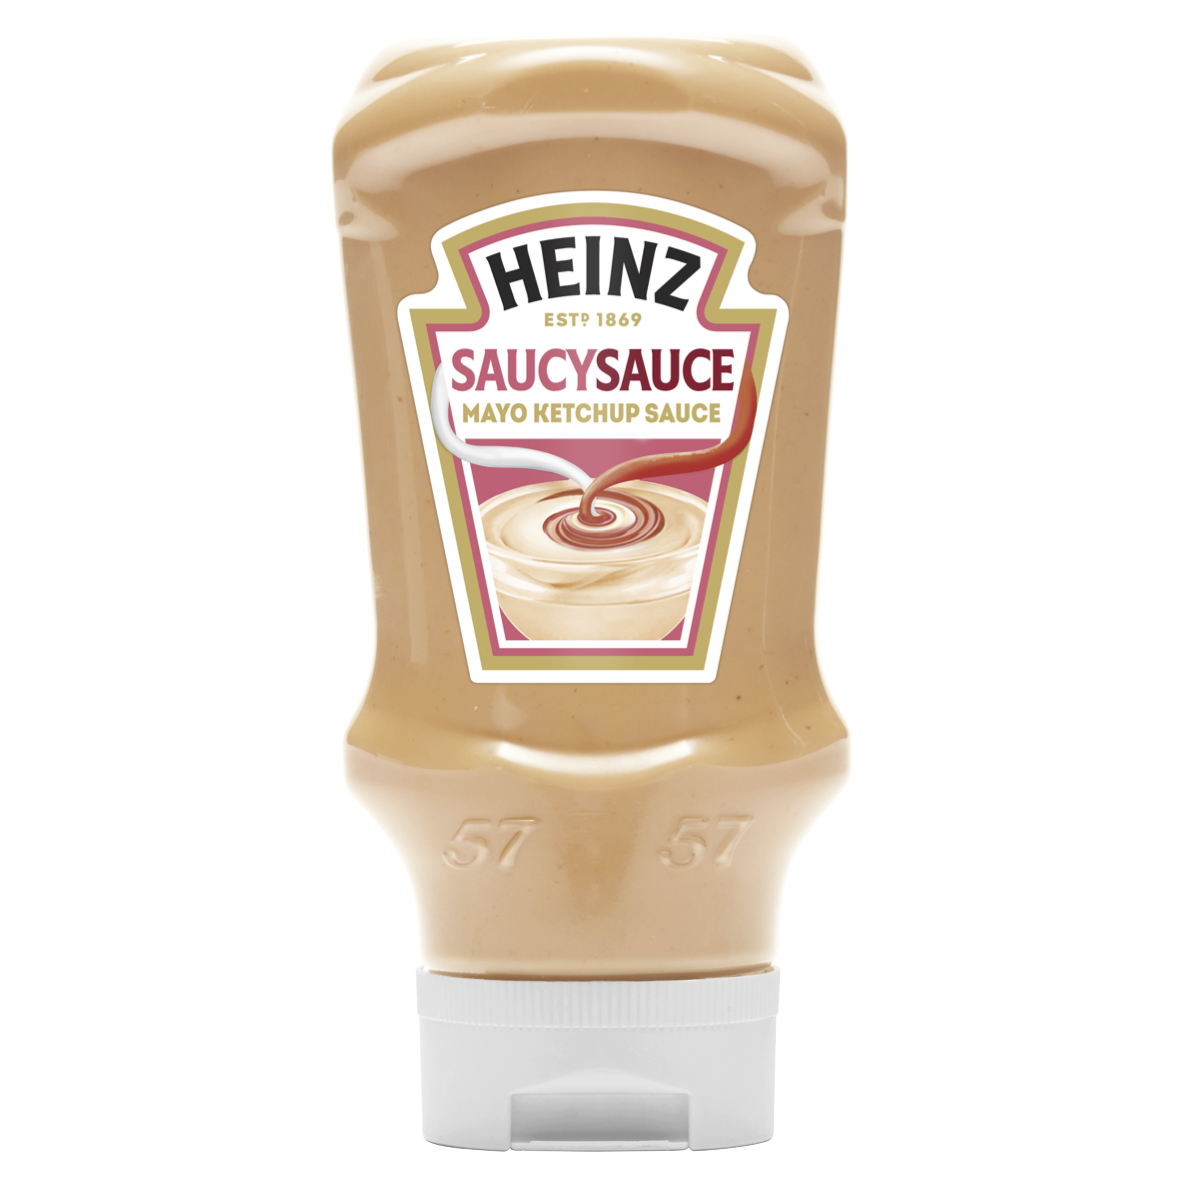 Photograph of 1 x 425g Heinz Saucy Sauce product